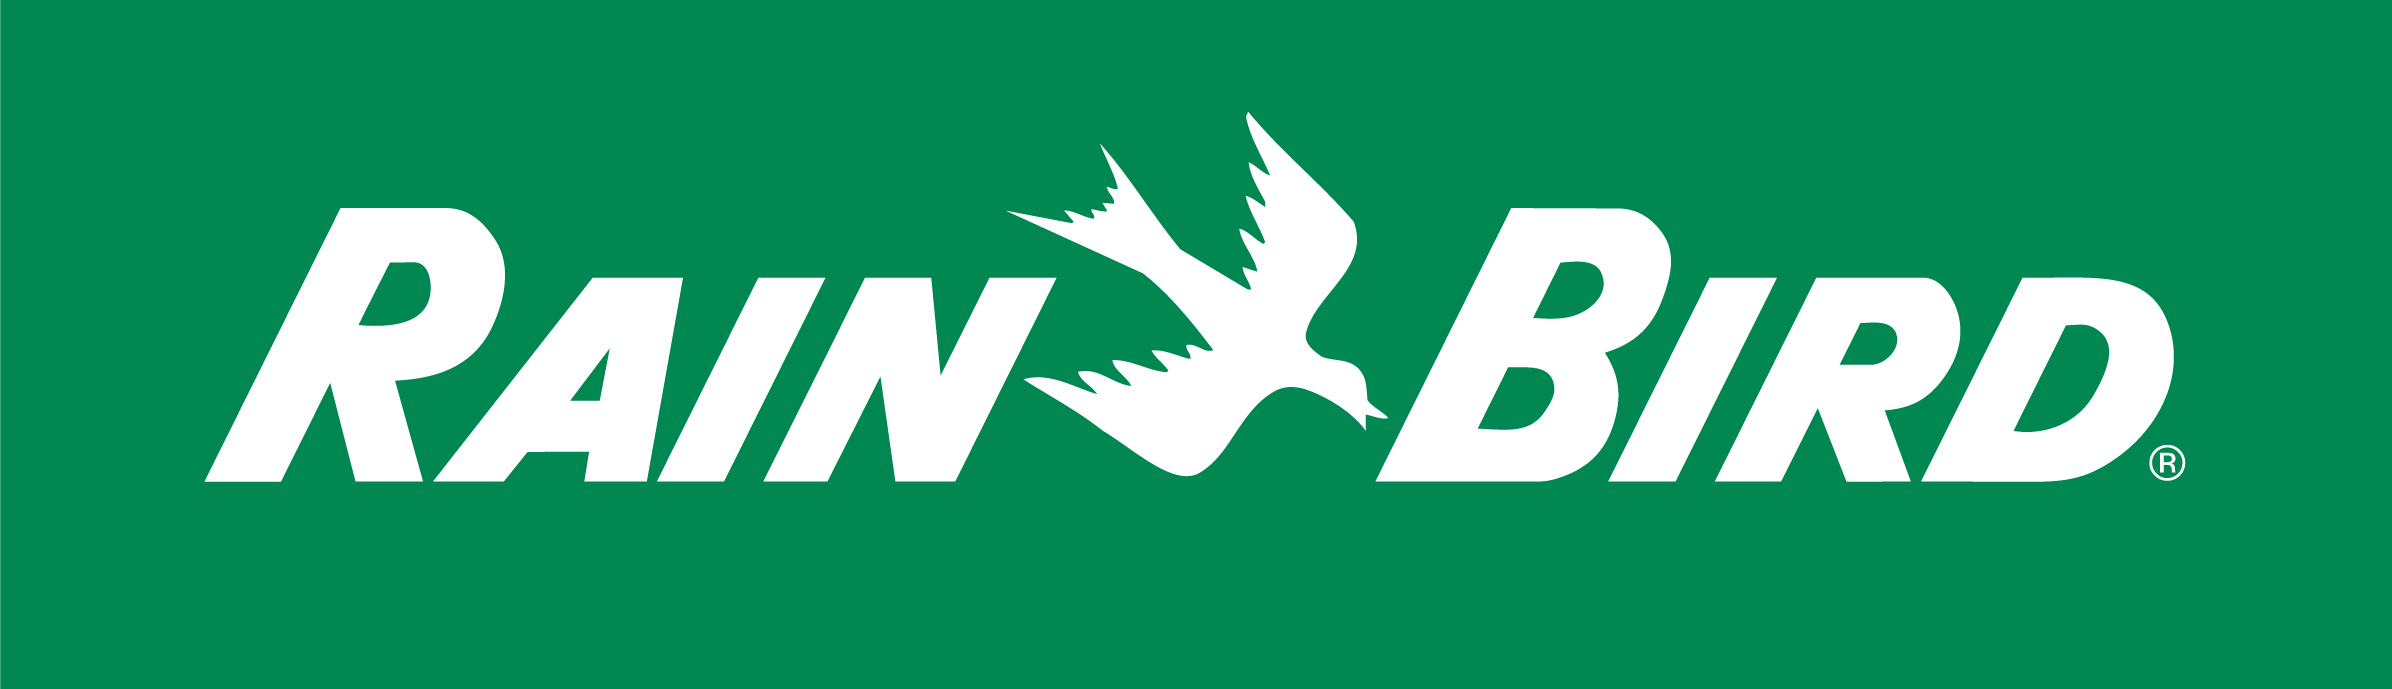 Rainbird logo